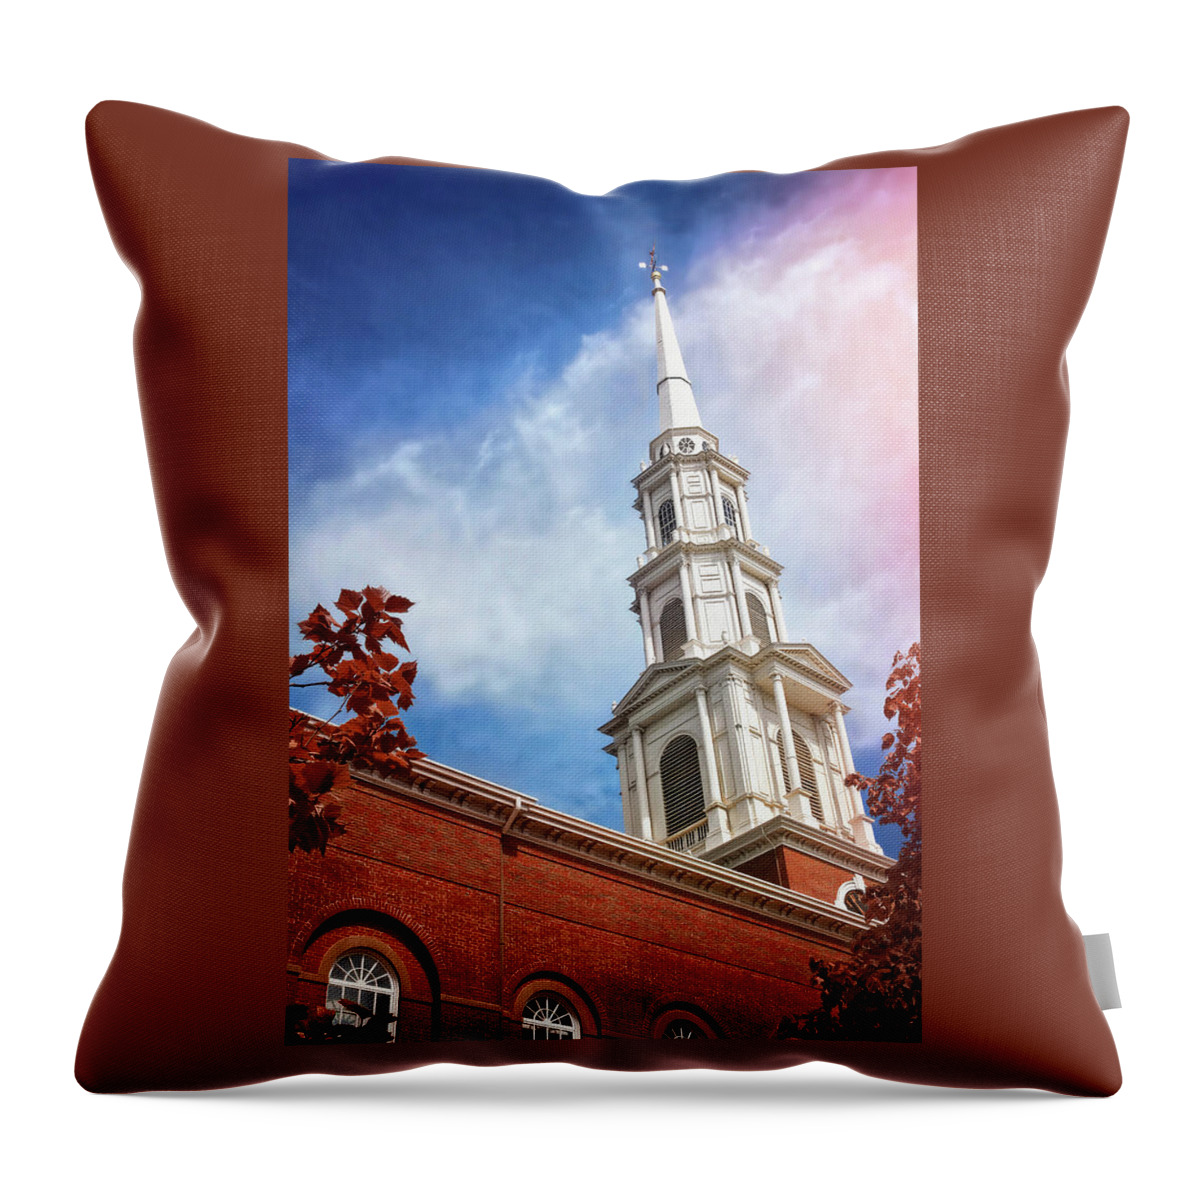 Boston Throw Pillow featuring the photograph Park Street Church Steeple Boston Massachusetts by Carol Japp